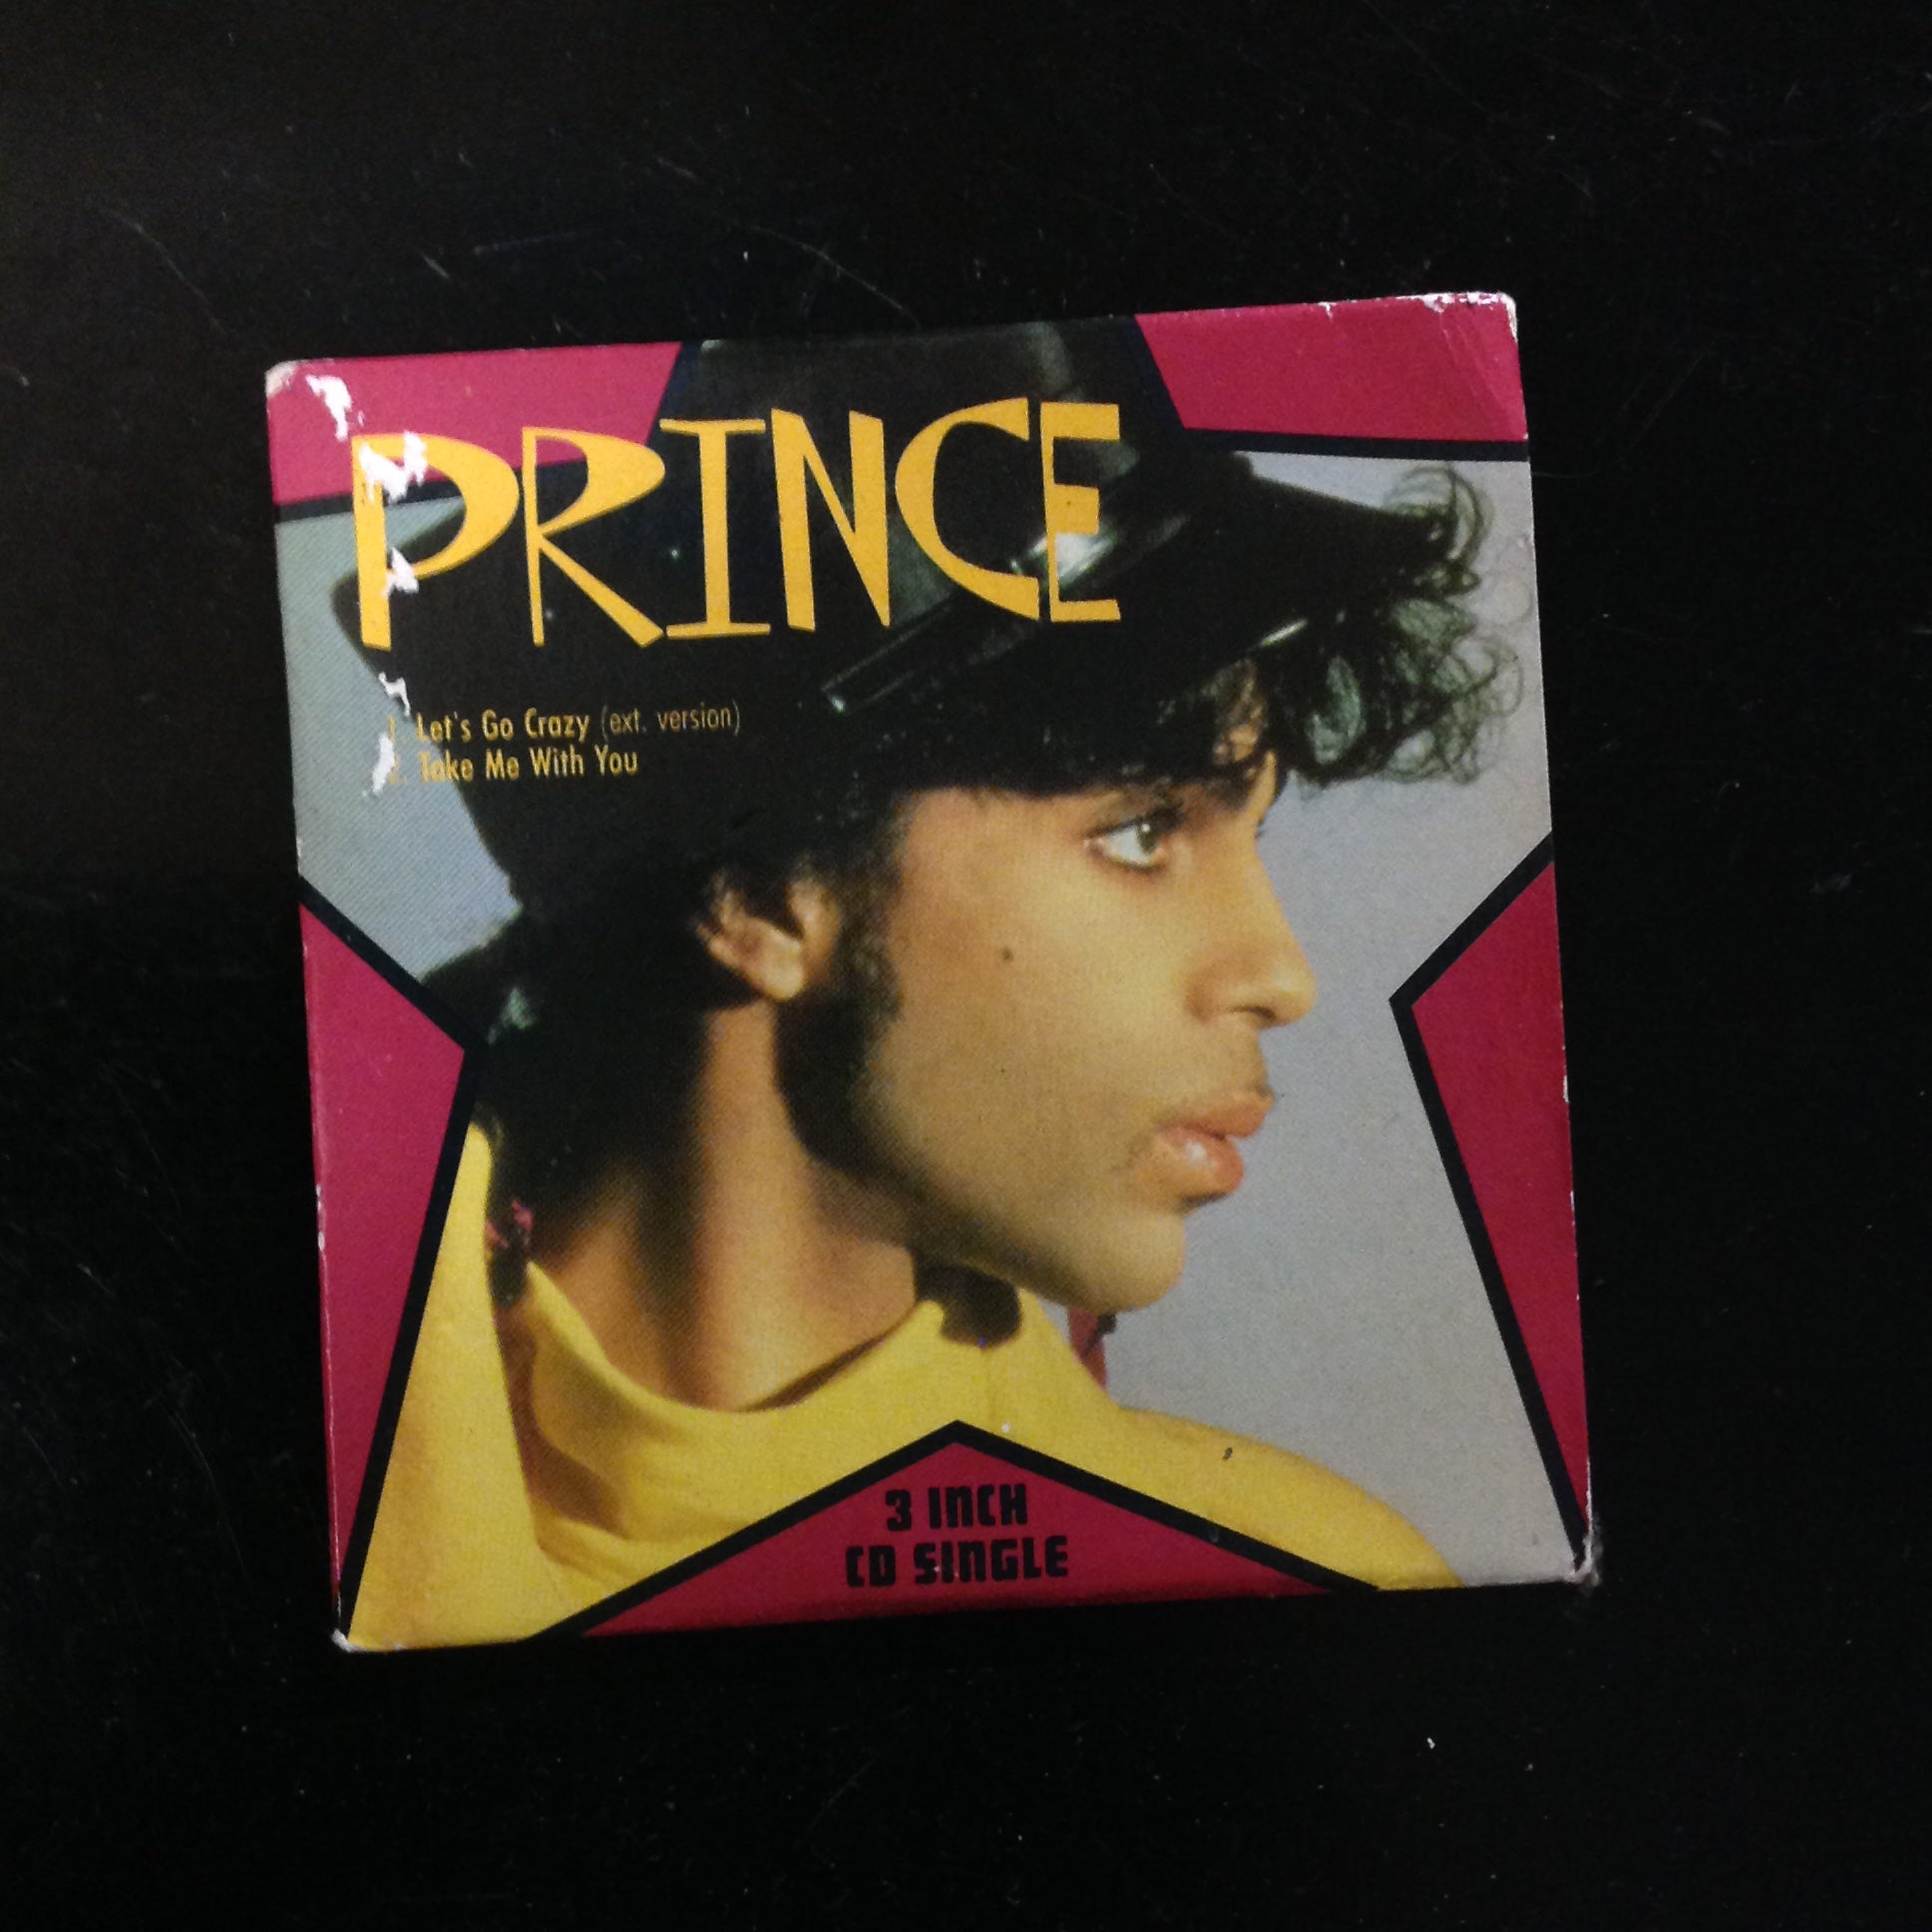 CD RARE Mini CD Prince 3" Single Let's Go Crazy Take Me With You  921 187-2